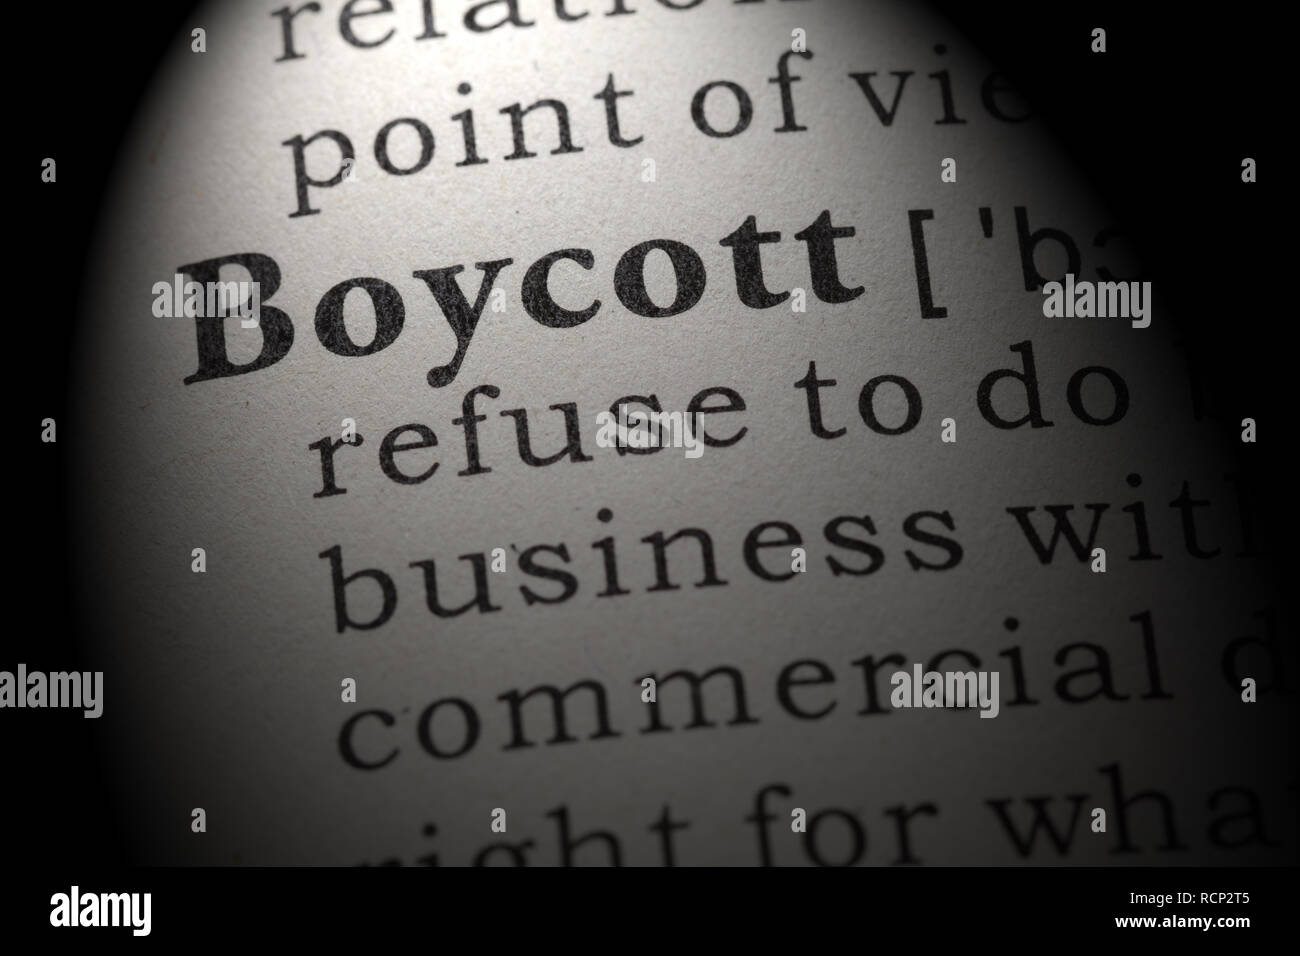 Fake Dictionary, Dictionary definition of the word boycott. including key descriptive words. Stock Photo